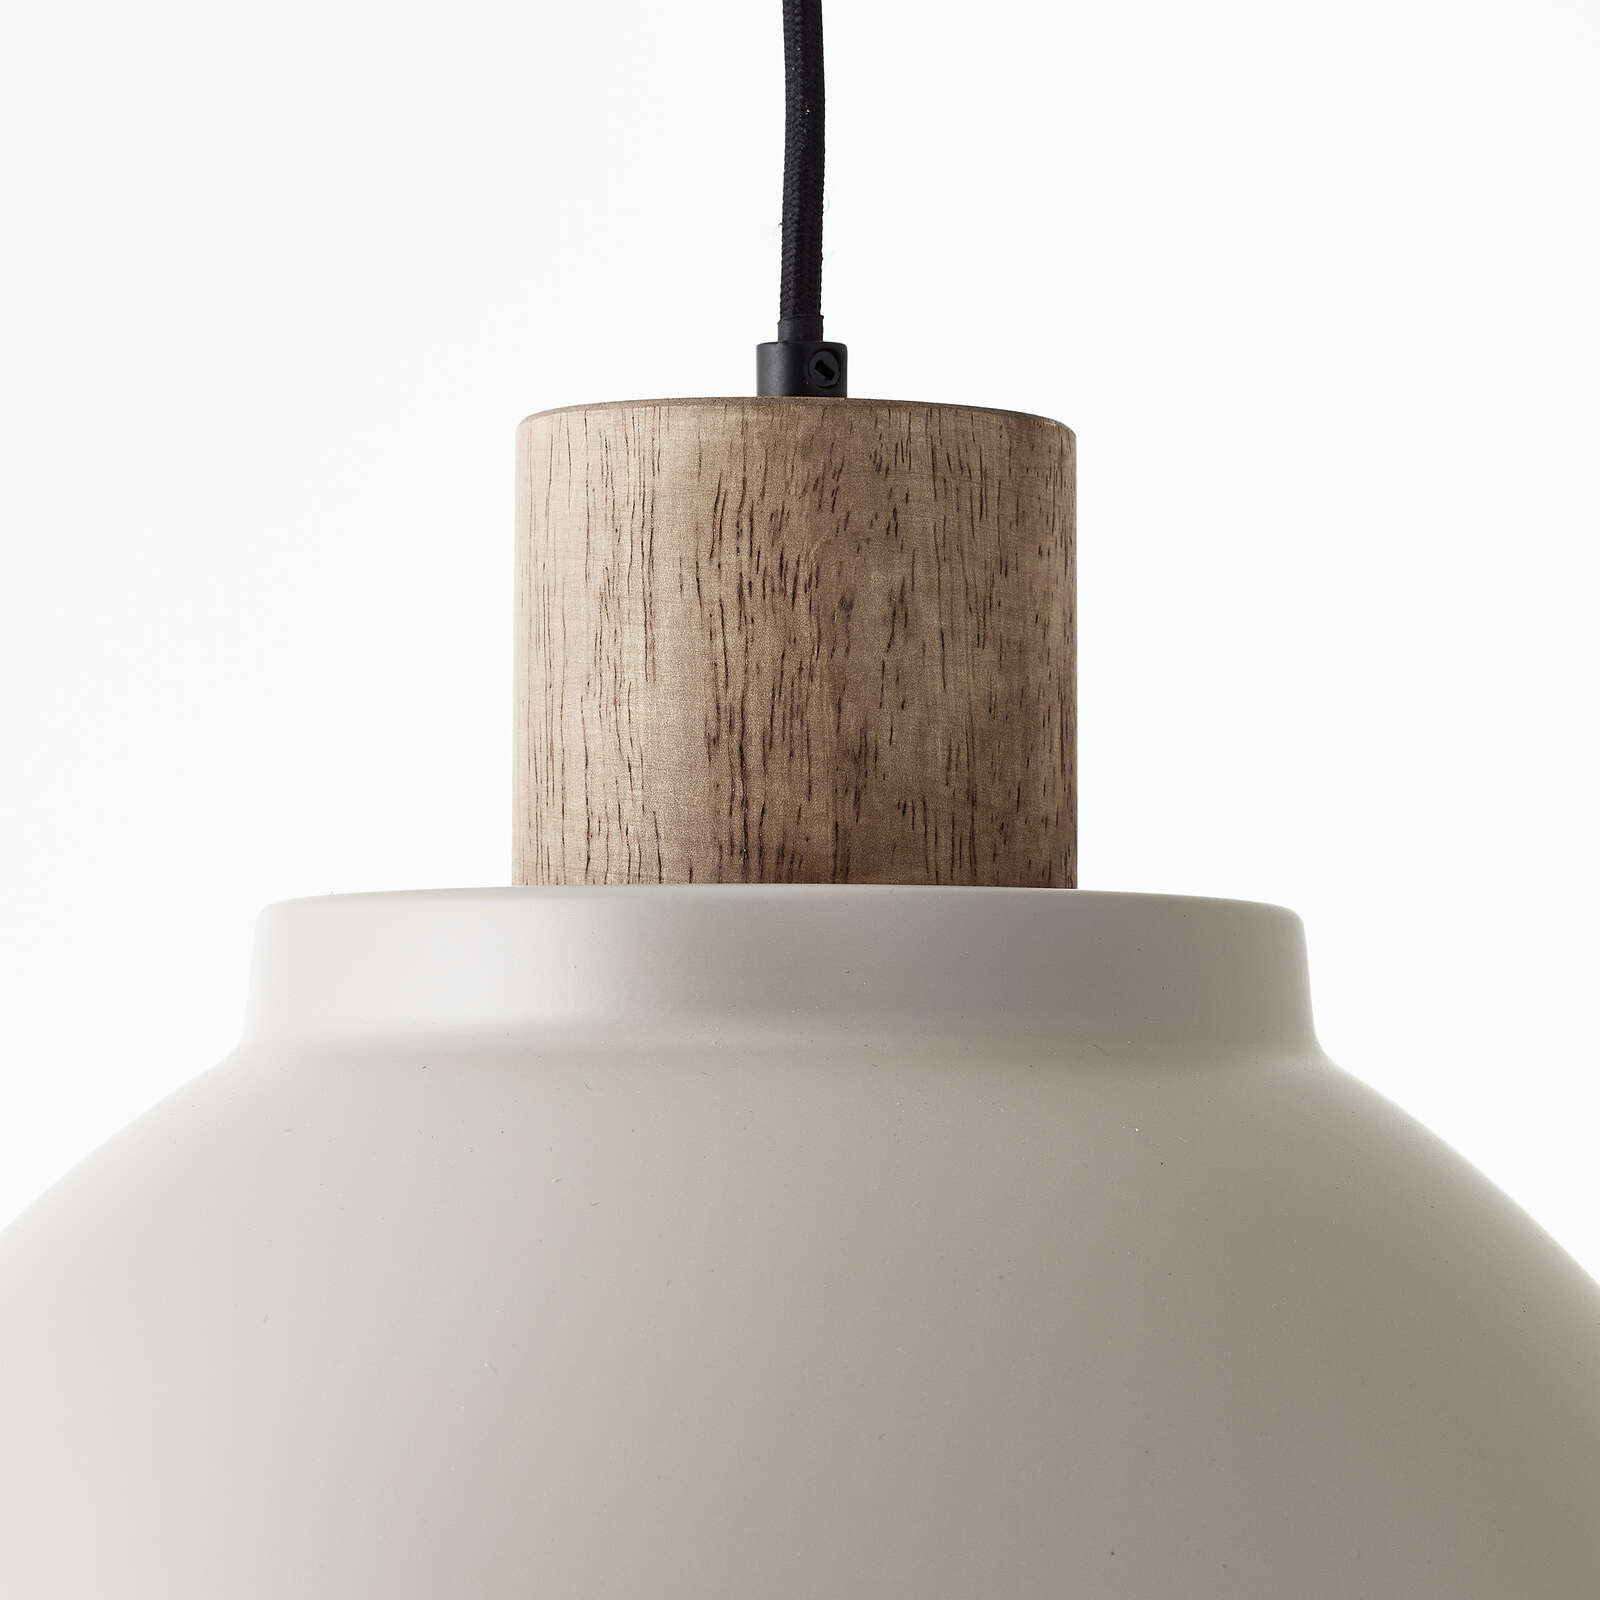             Wooden pendant light - Franziska 11 - Grey
        